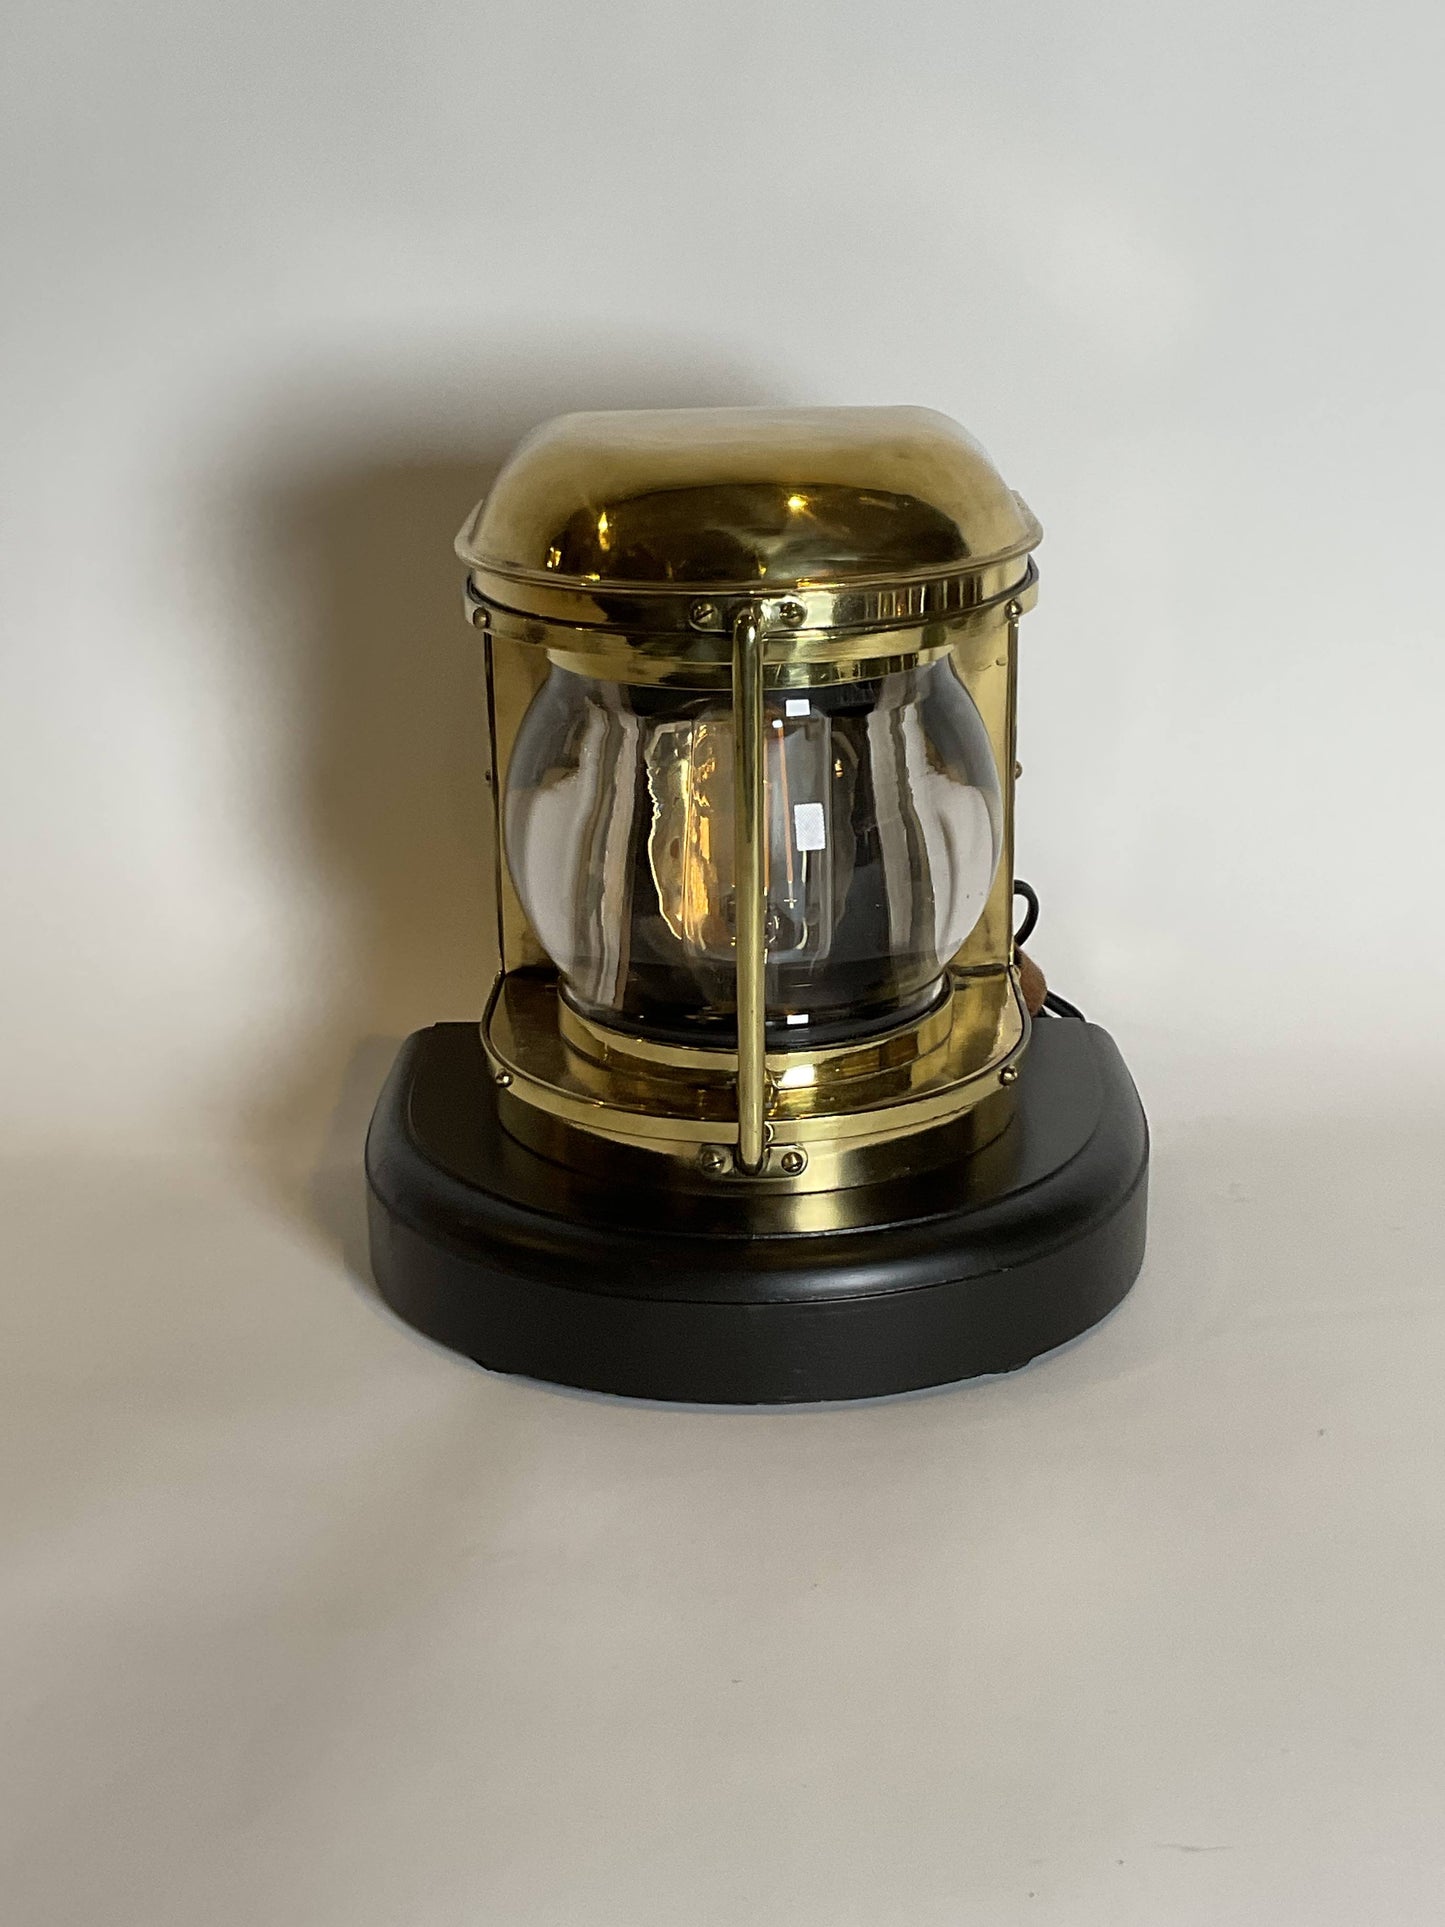 Polished Boat Lantern with Beautiful Lens